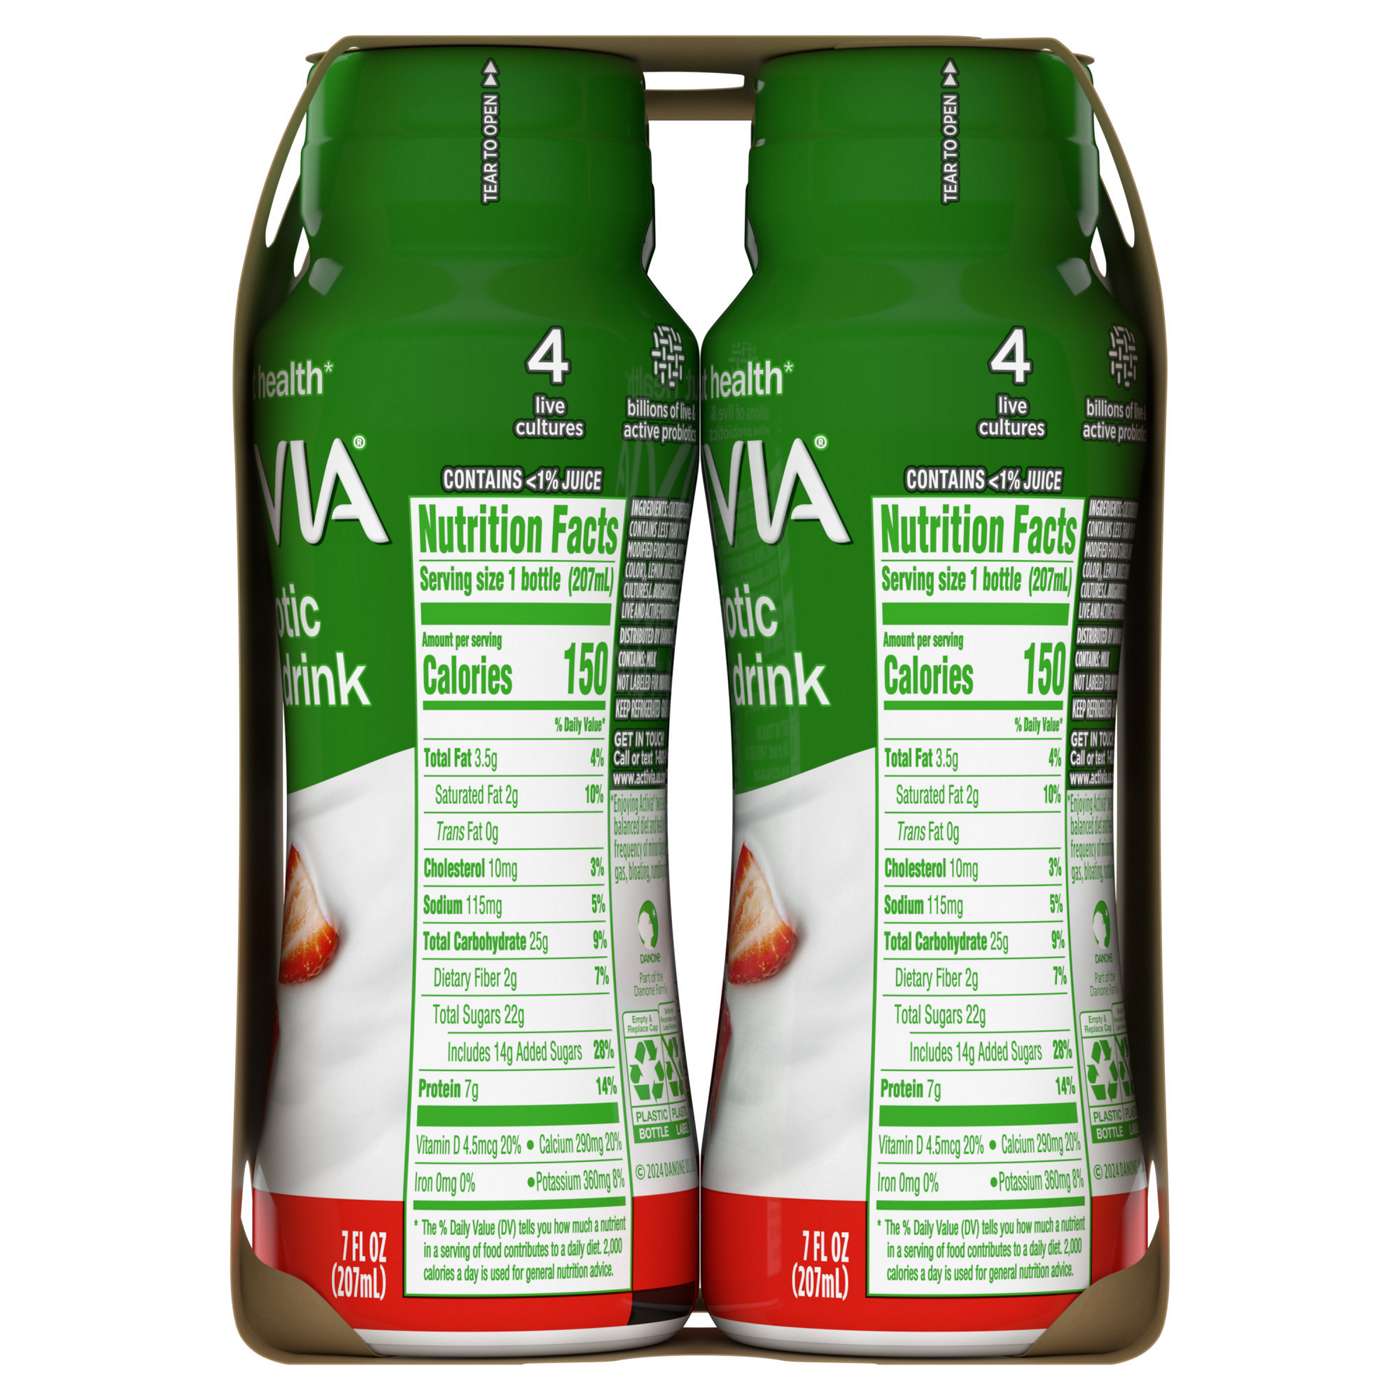 Activia® Strawberry Lowfat Yogurt Drink 4 7 Fl. Oz. Bottles, Yogurt